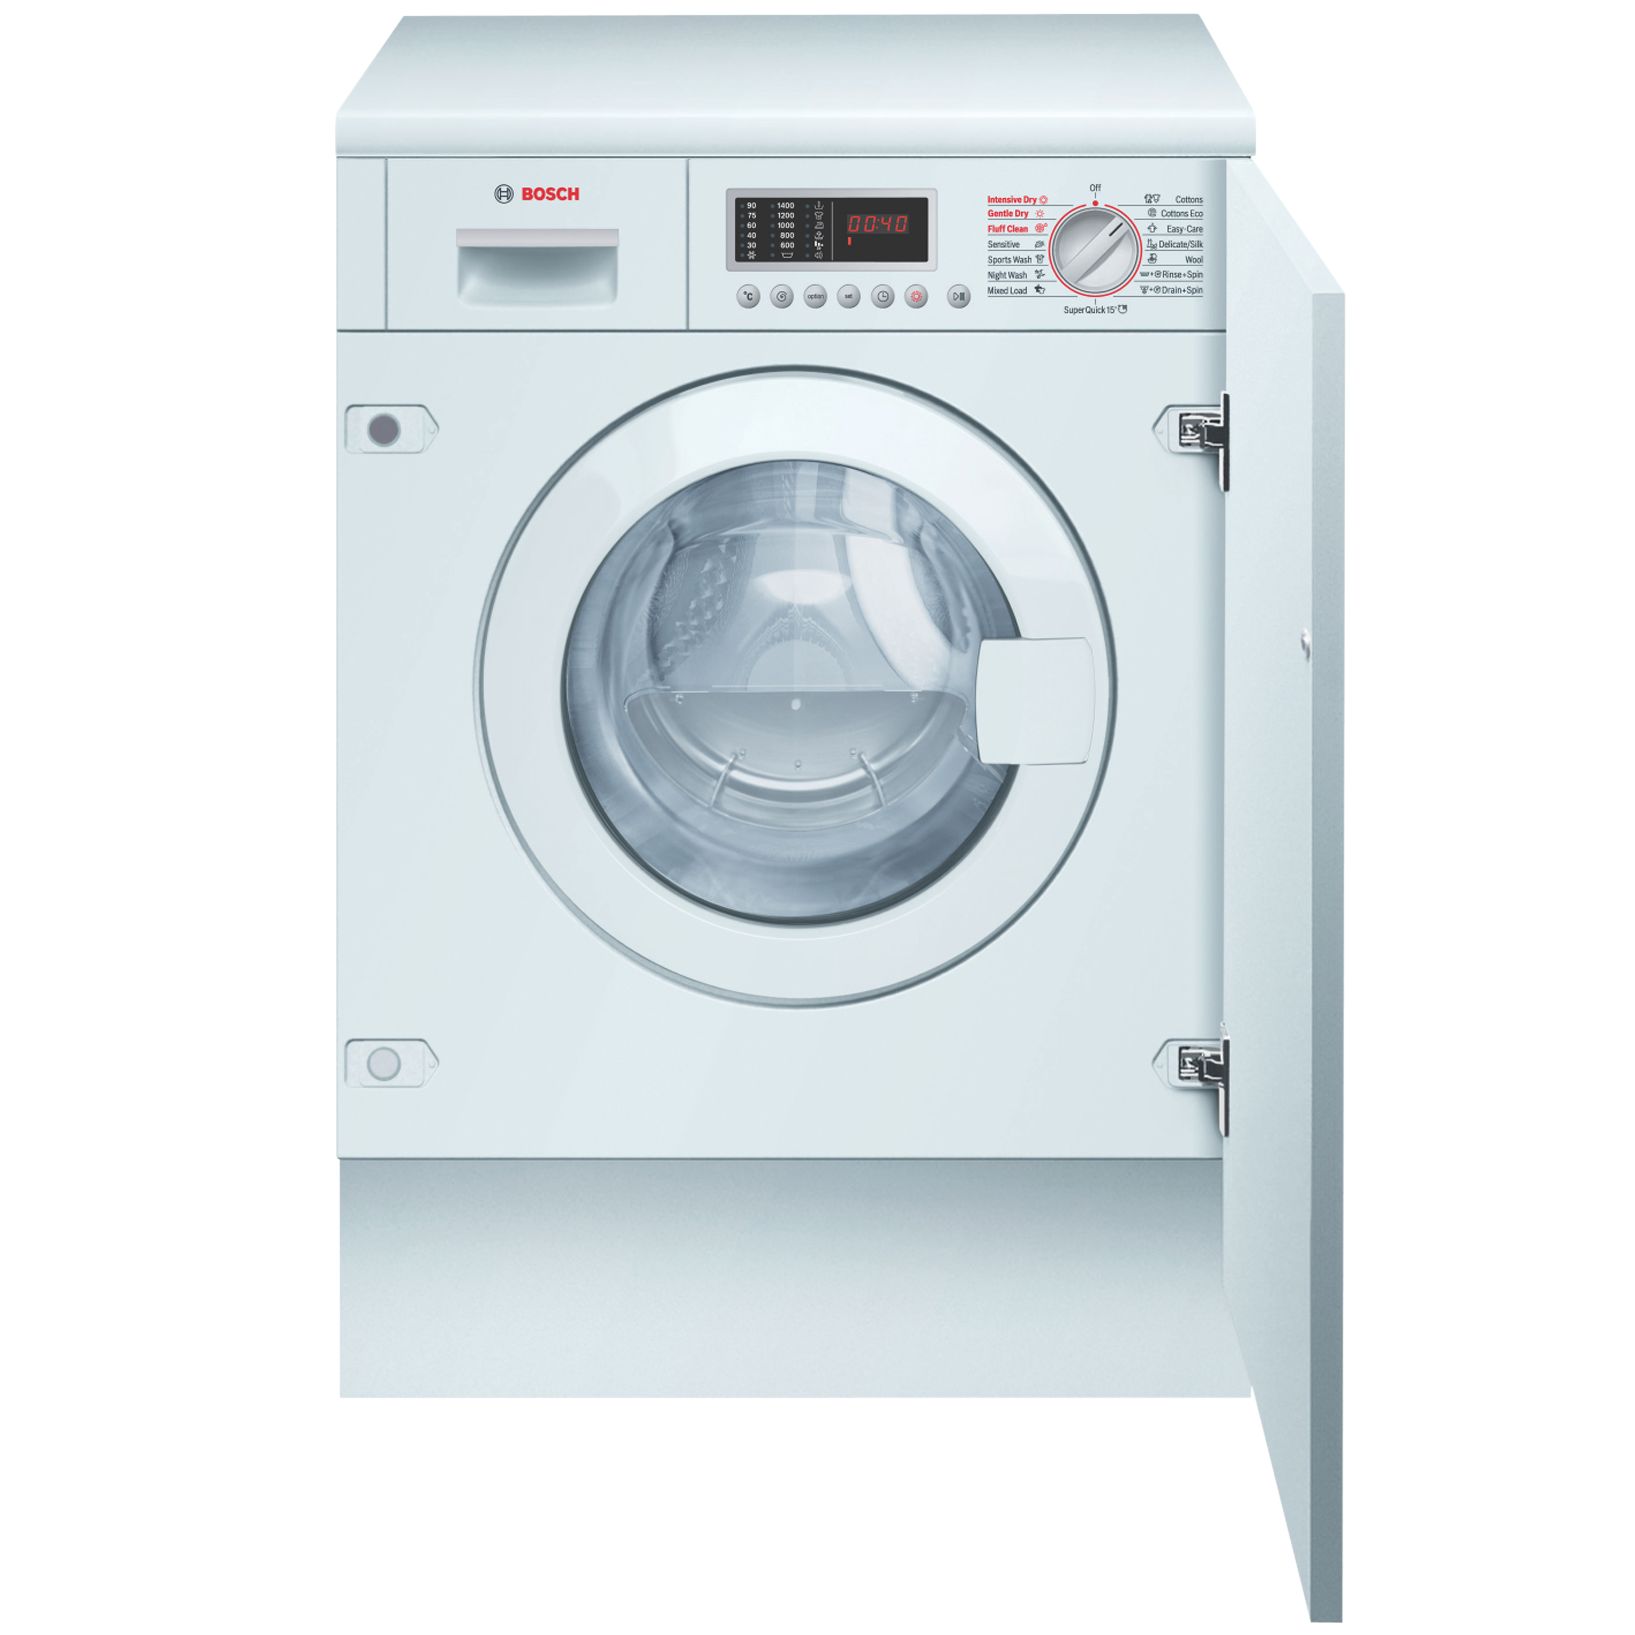 Bosch Avantixx WKD28540GB Integrated Washer Dryer, White at John Lewis